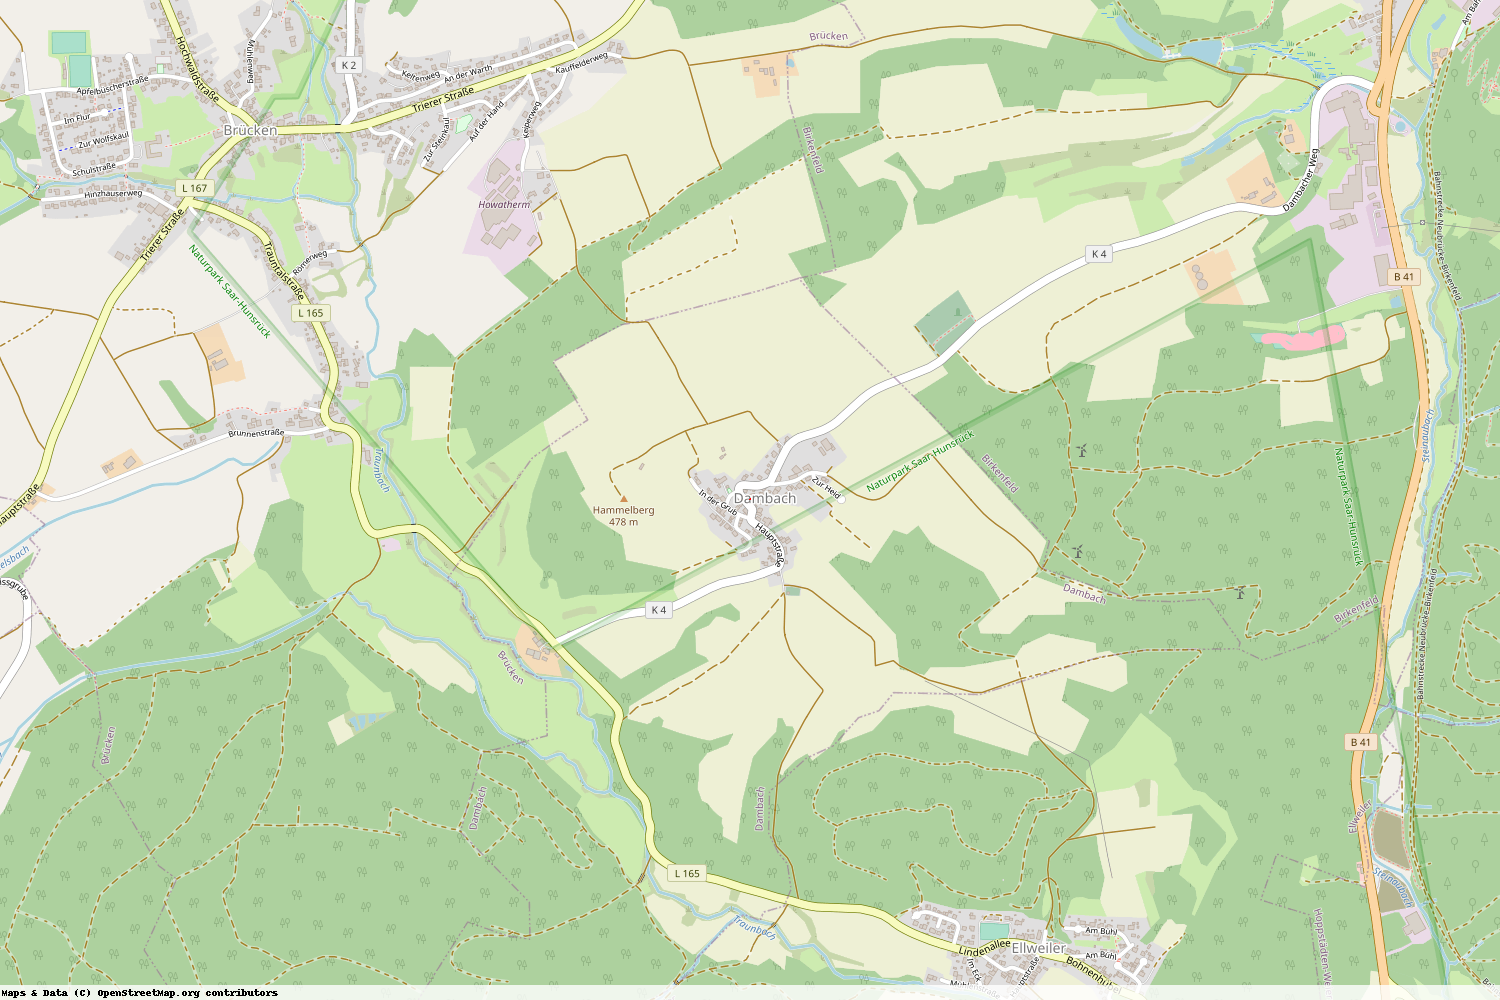 Ist gerade Stromausfall in Rheinland-Pfalz - Birkenfeld - Dambach?